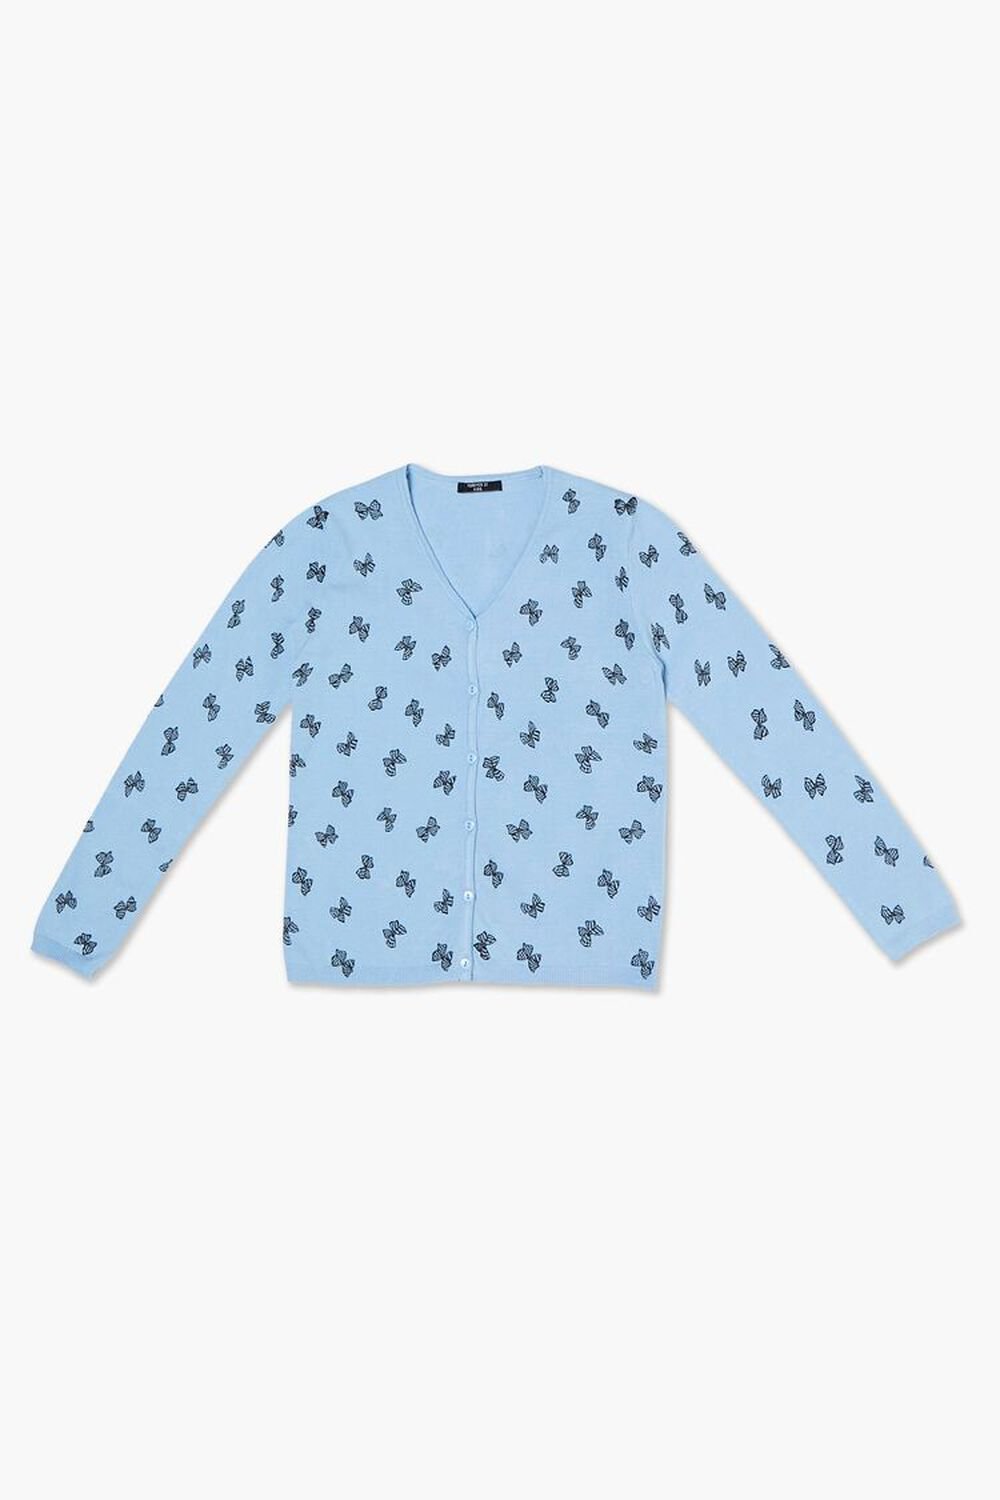 BLUE/BLACK Girls Butterfly Print Cardigan Sweater (Kids), image 1